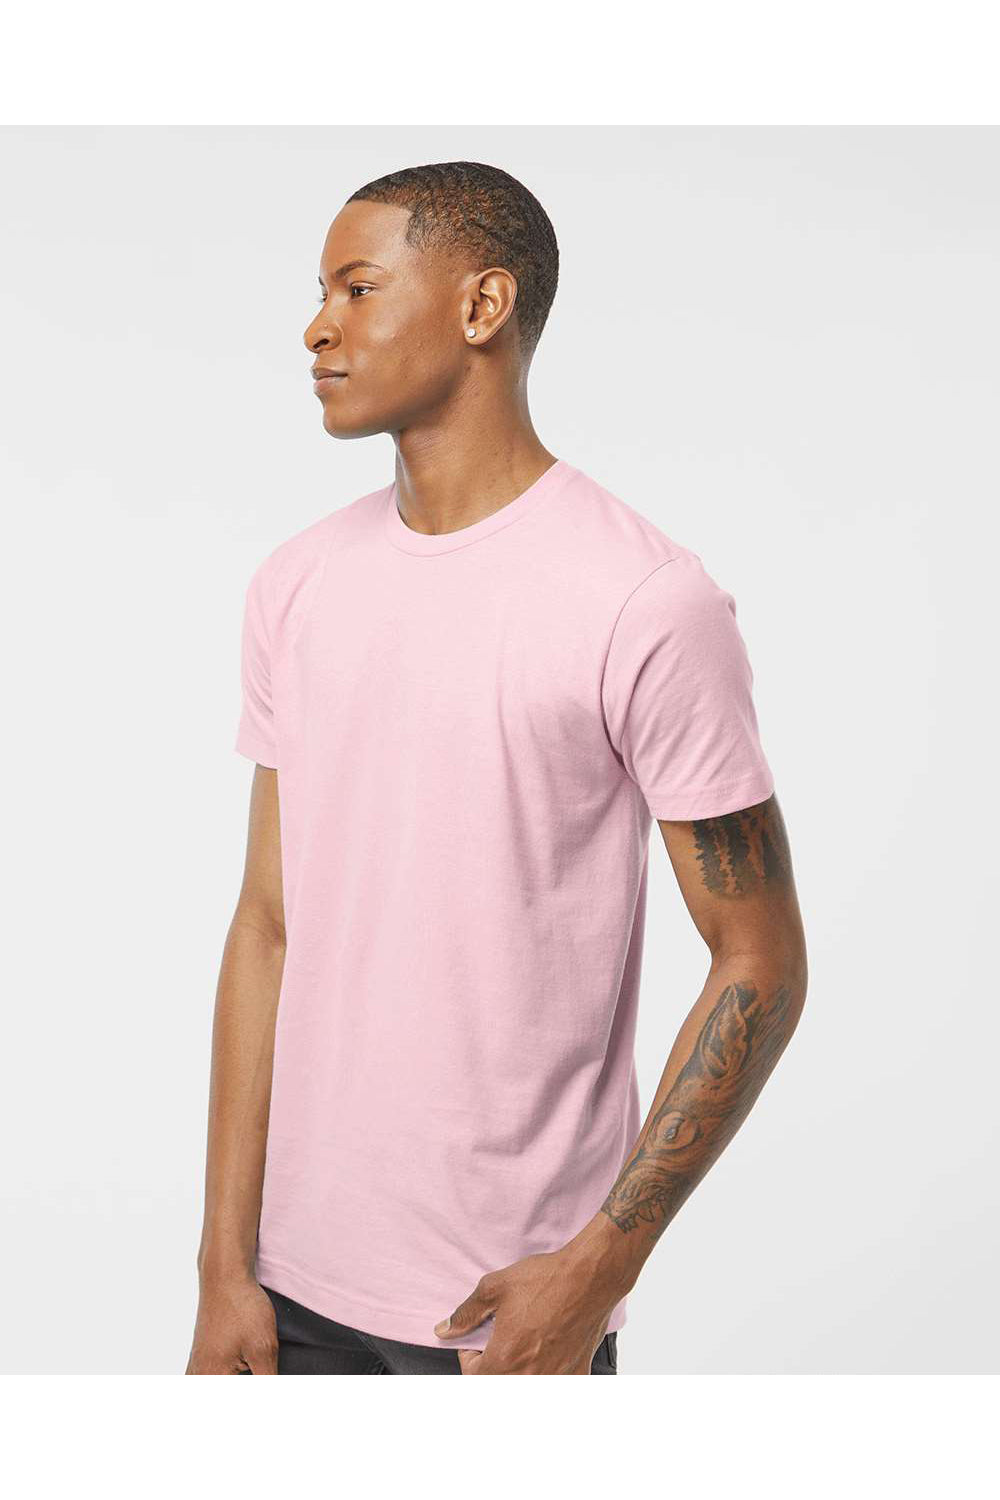 Tultex 202 Mens Fine Jersey Short Sleeve Crewneck T-Shirt Pink Model Side